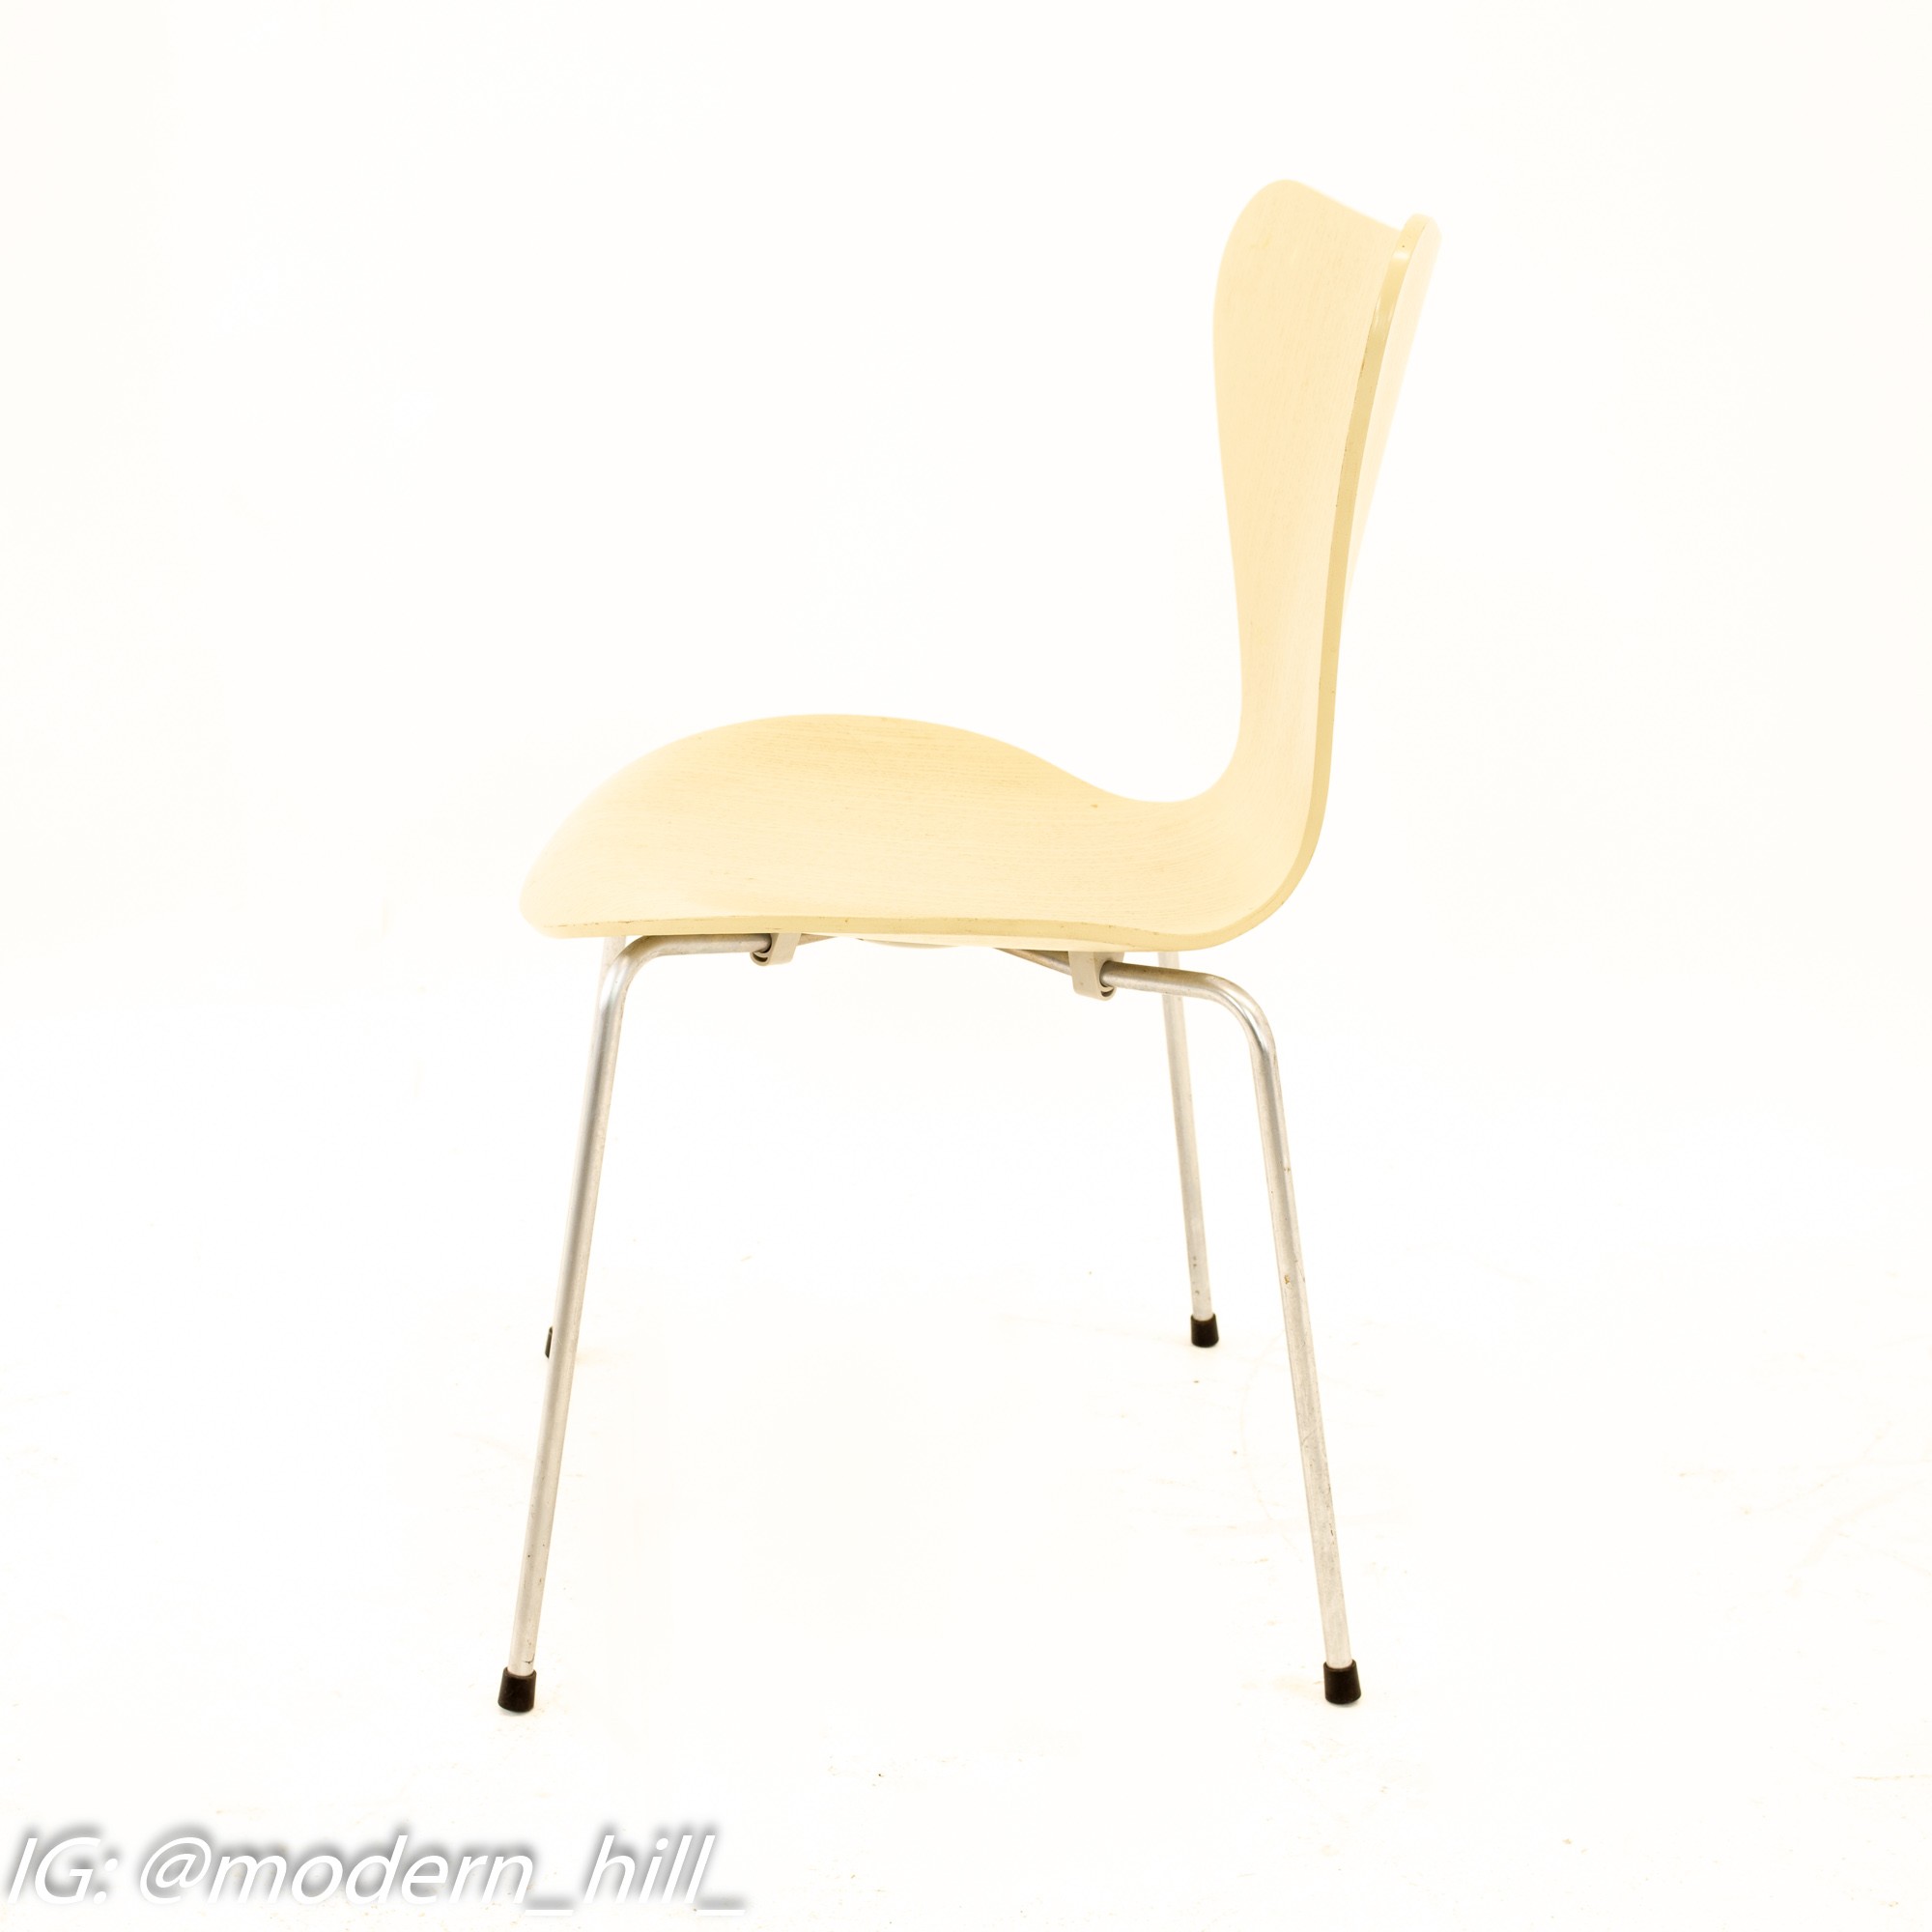 Arne Jacobsen for Fritz Hansen Mid Century Modern Series 7 Chairs - Set of 2